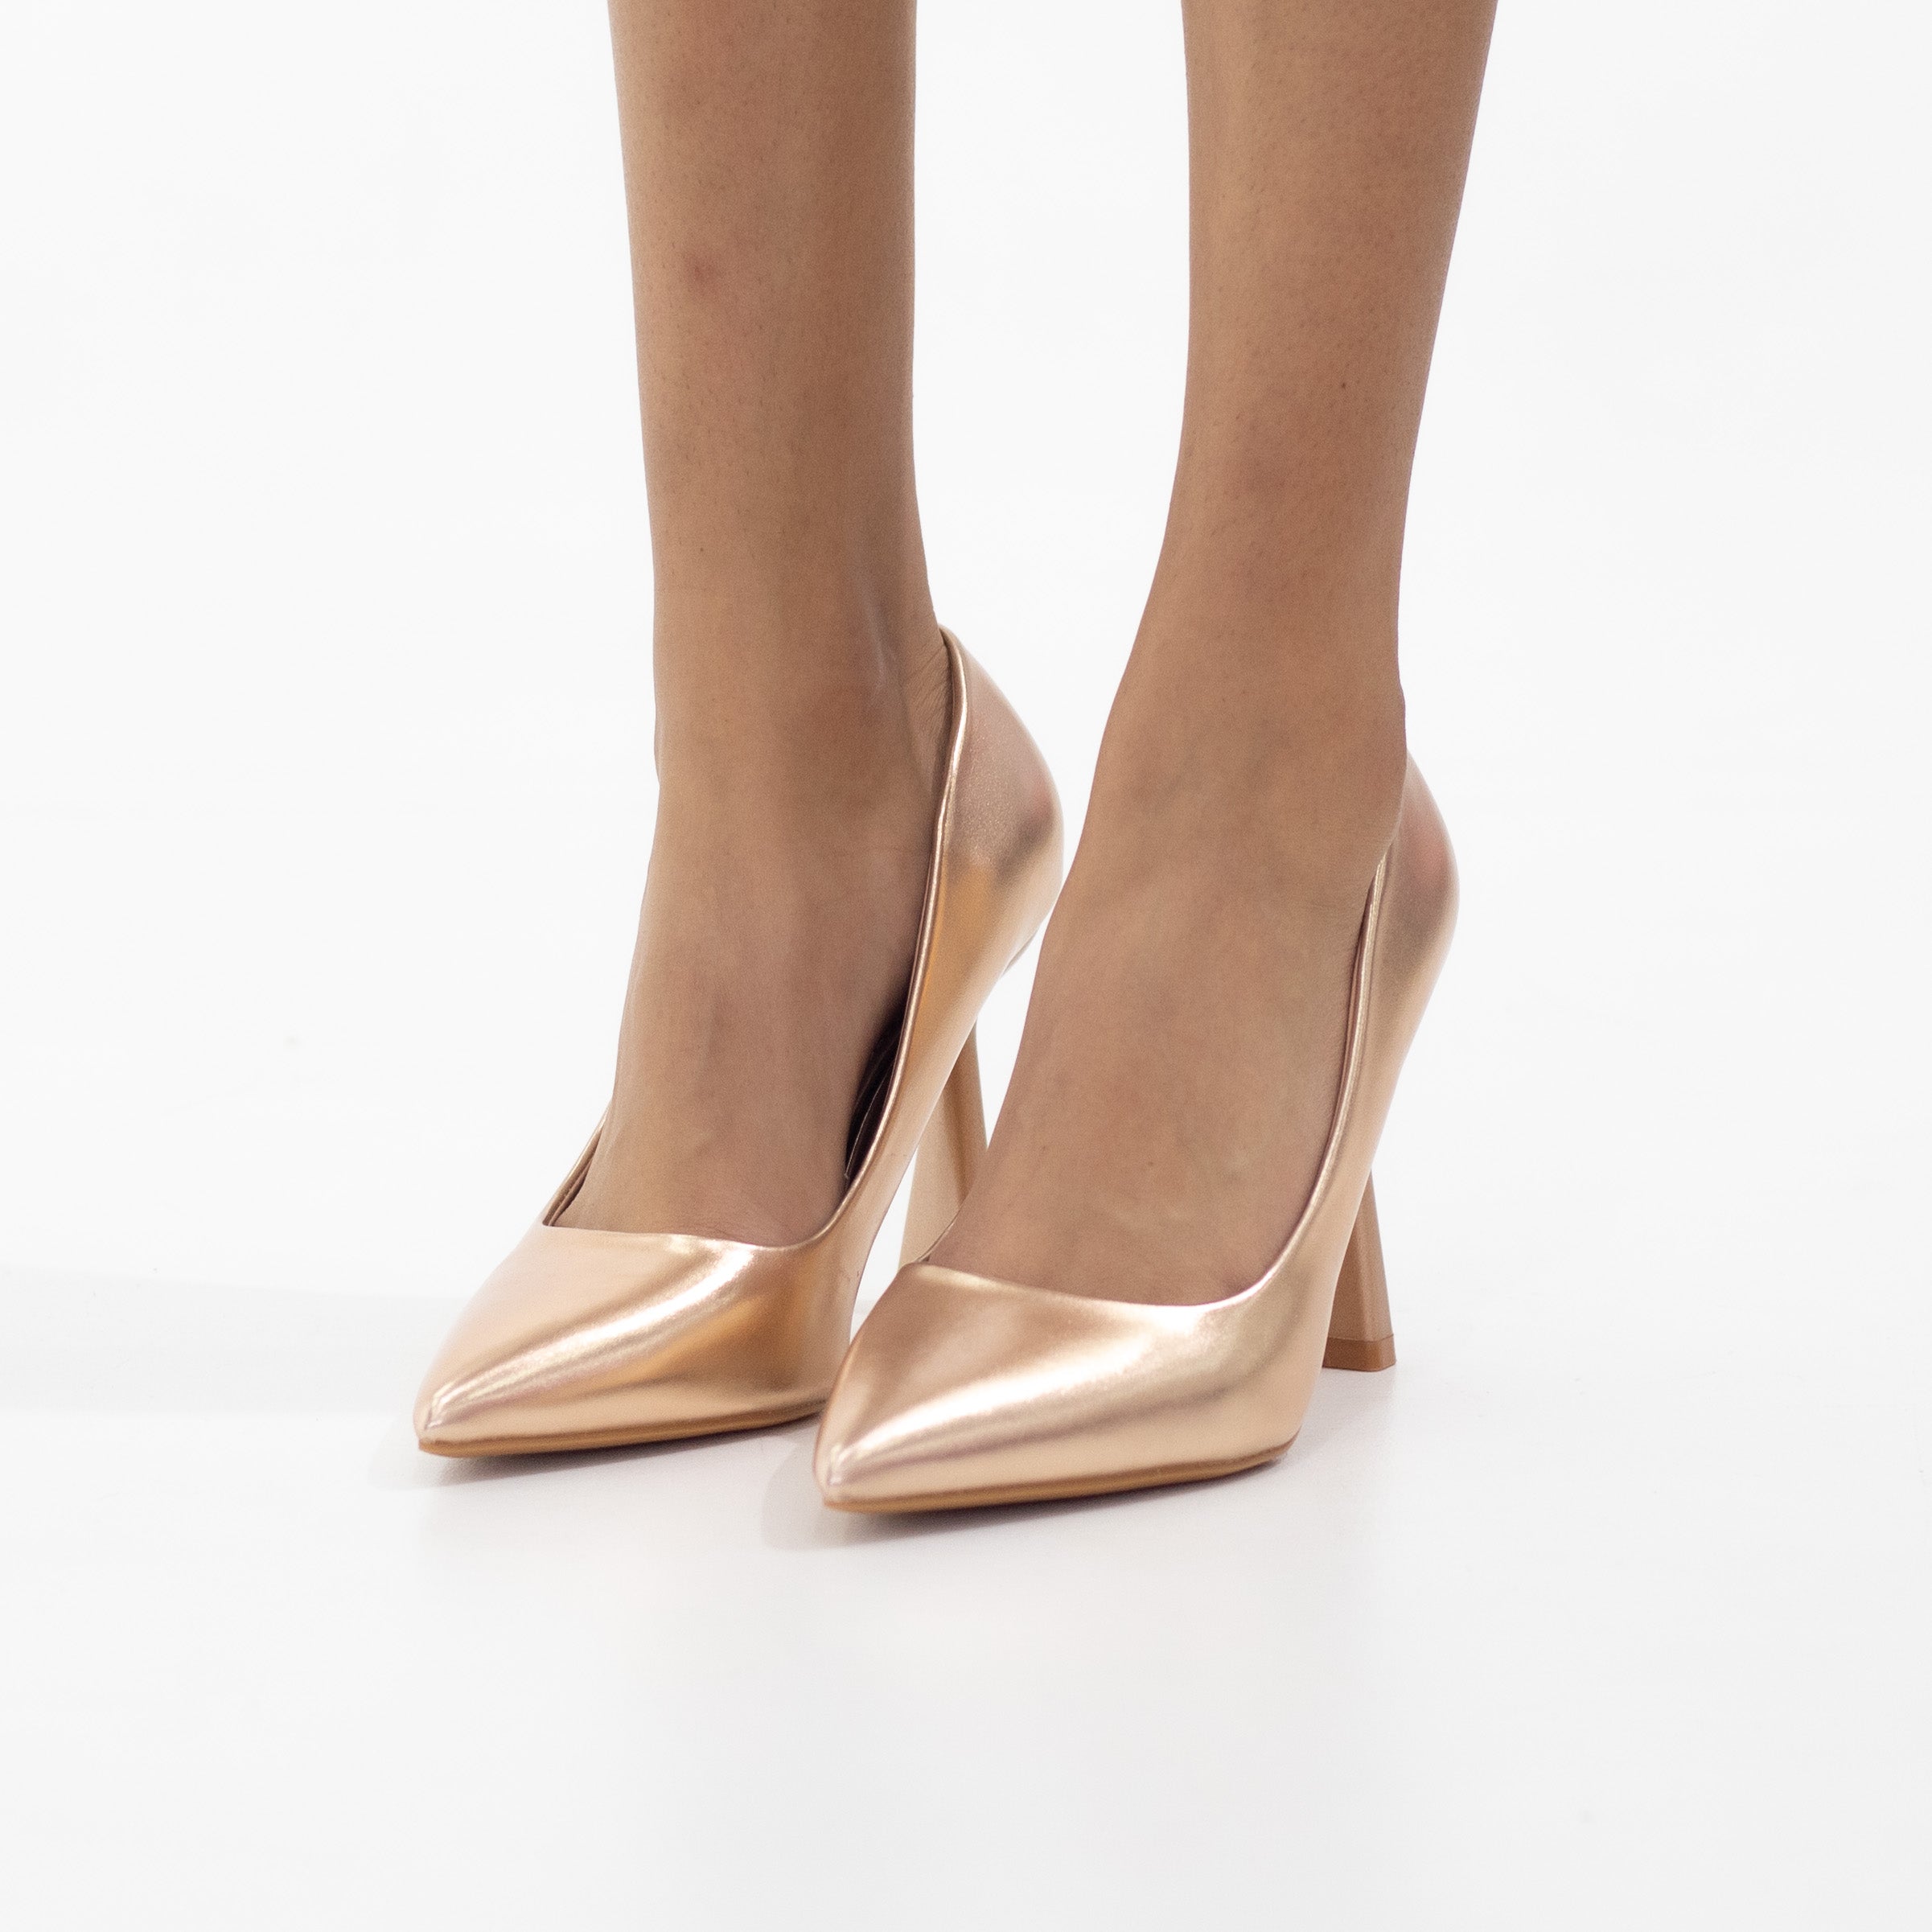 Rose gold 10cm sleek stiletto heel court shoes june